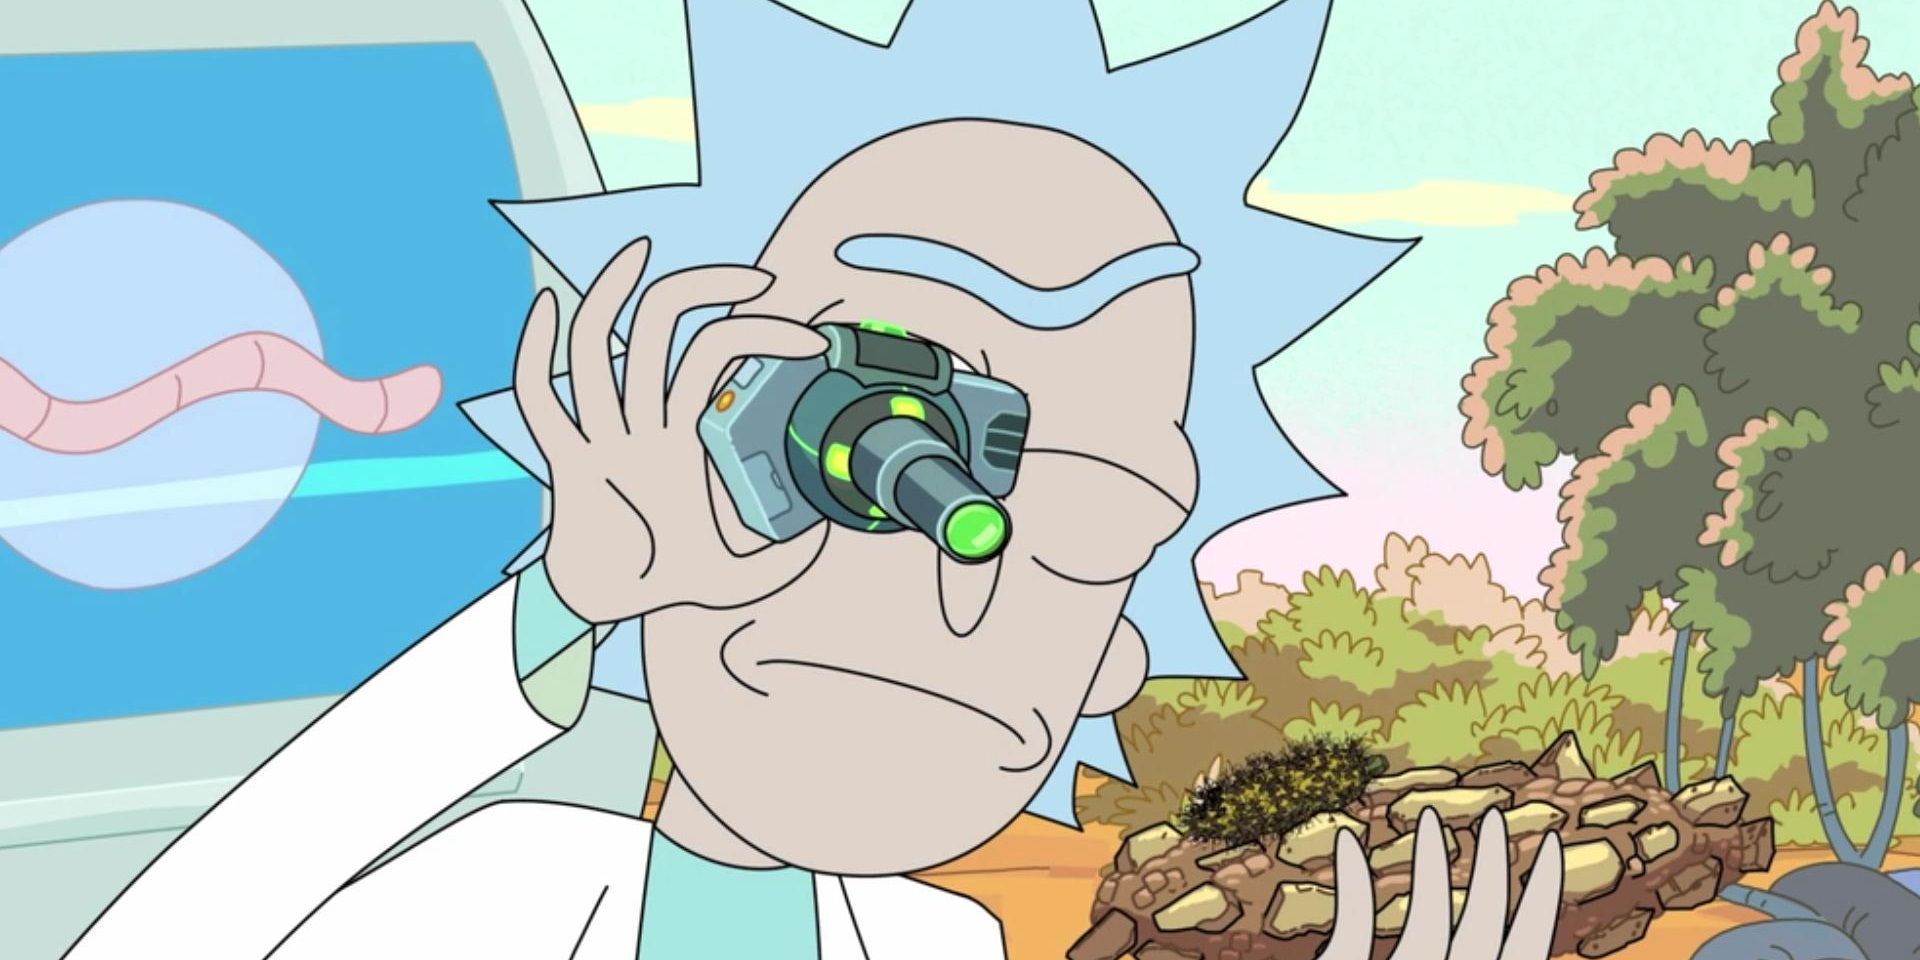 Rick examines a cob in Rick and Morty